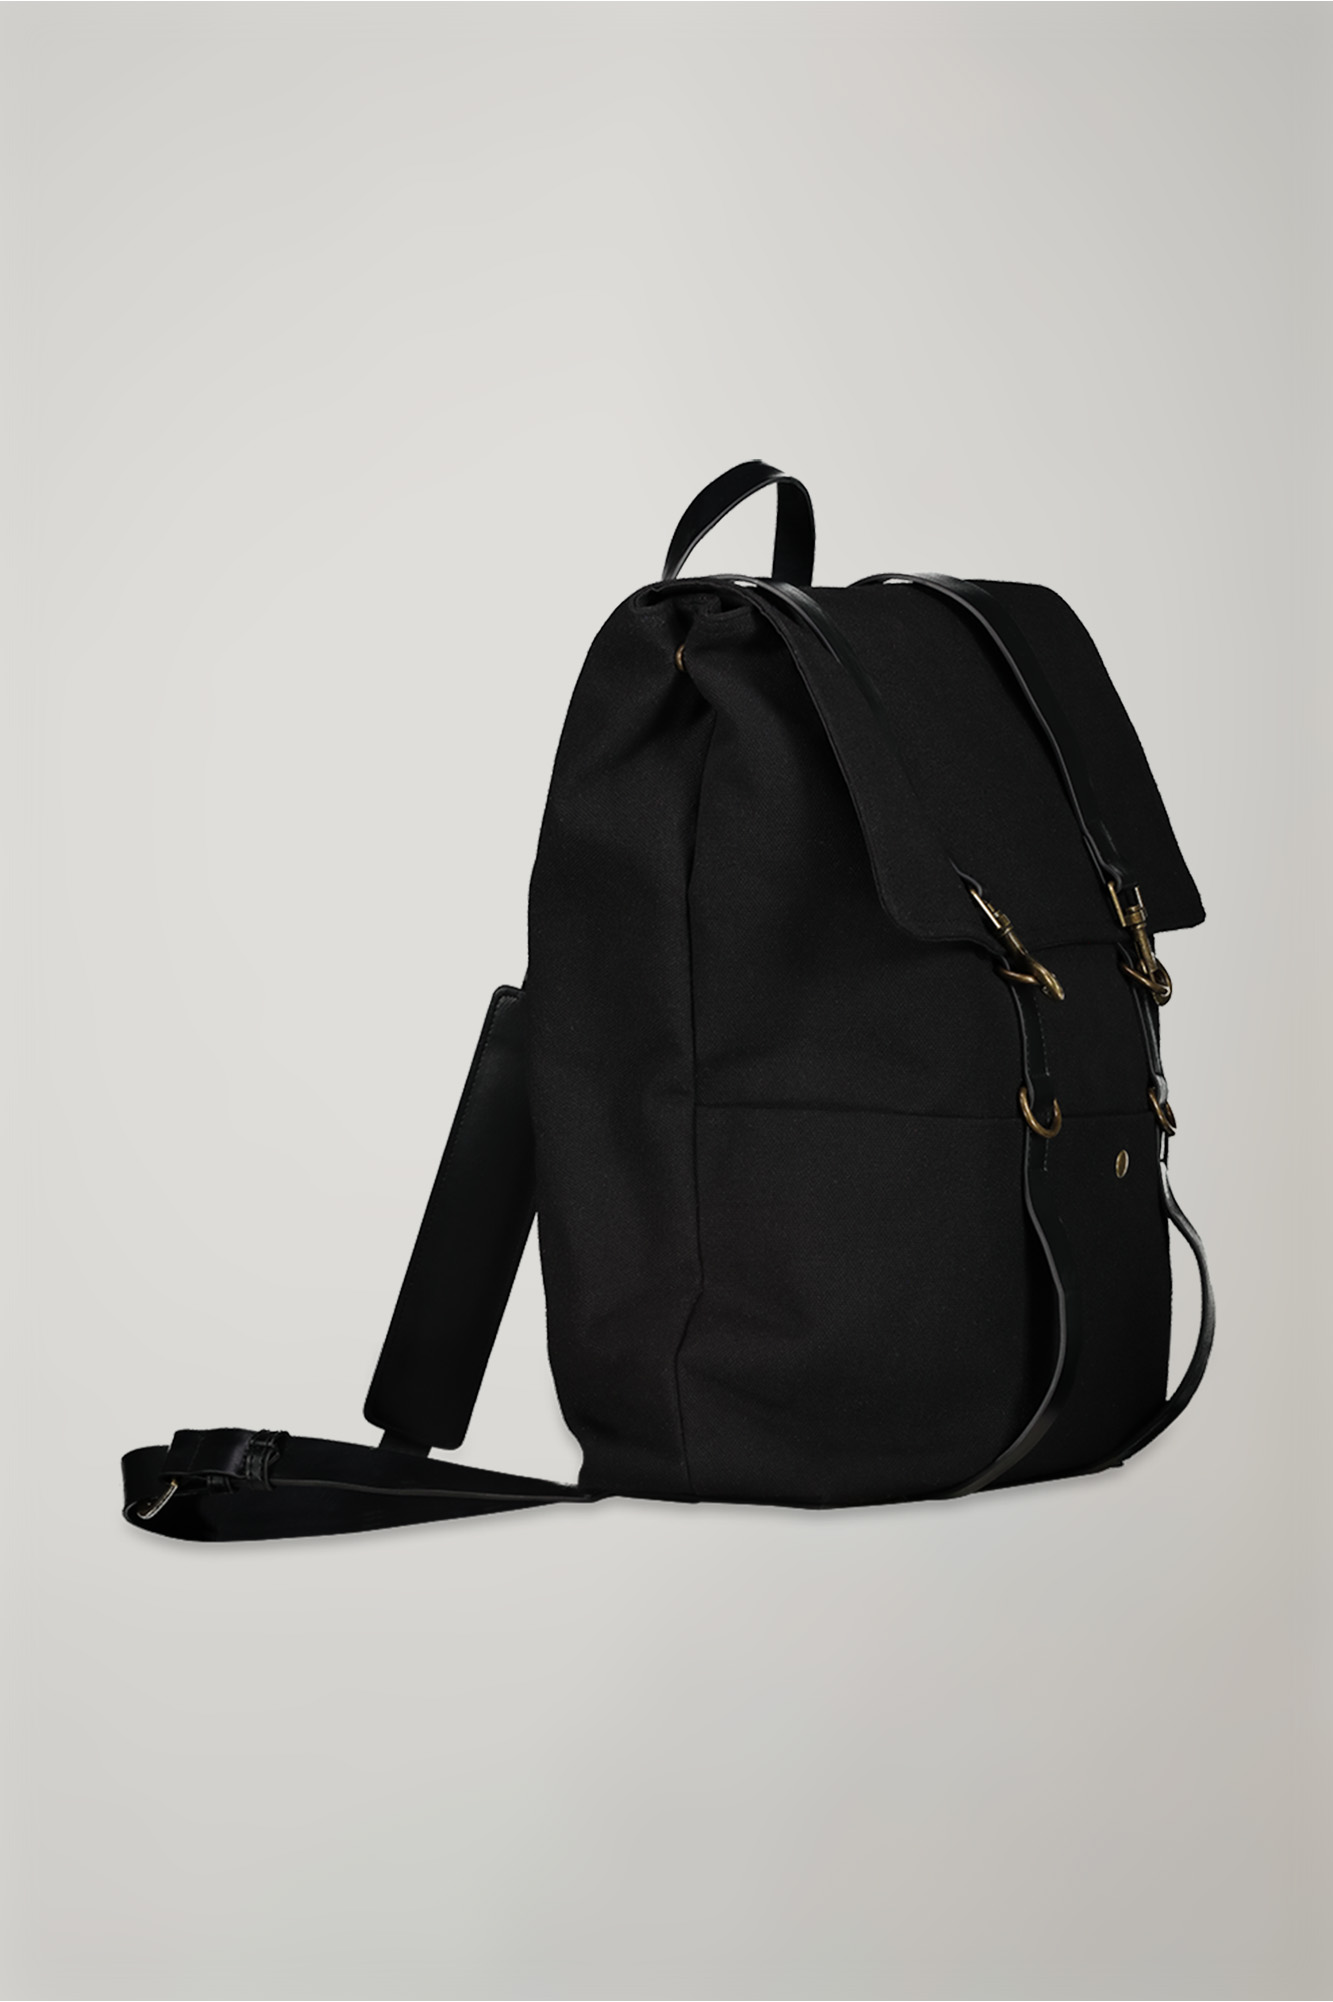 Men's canvas backpack | Doppelganger | Bags Men’s Online